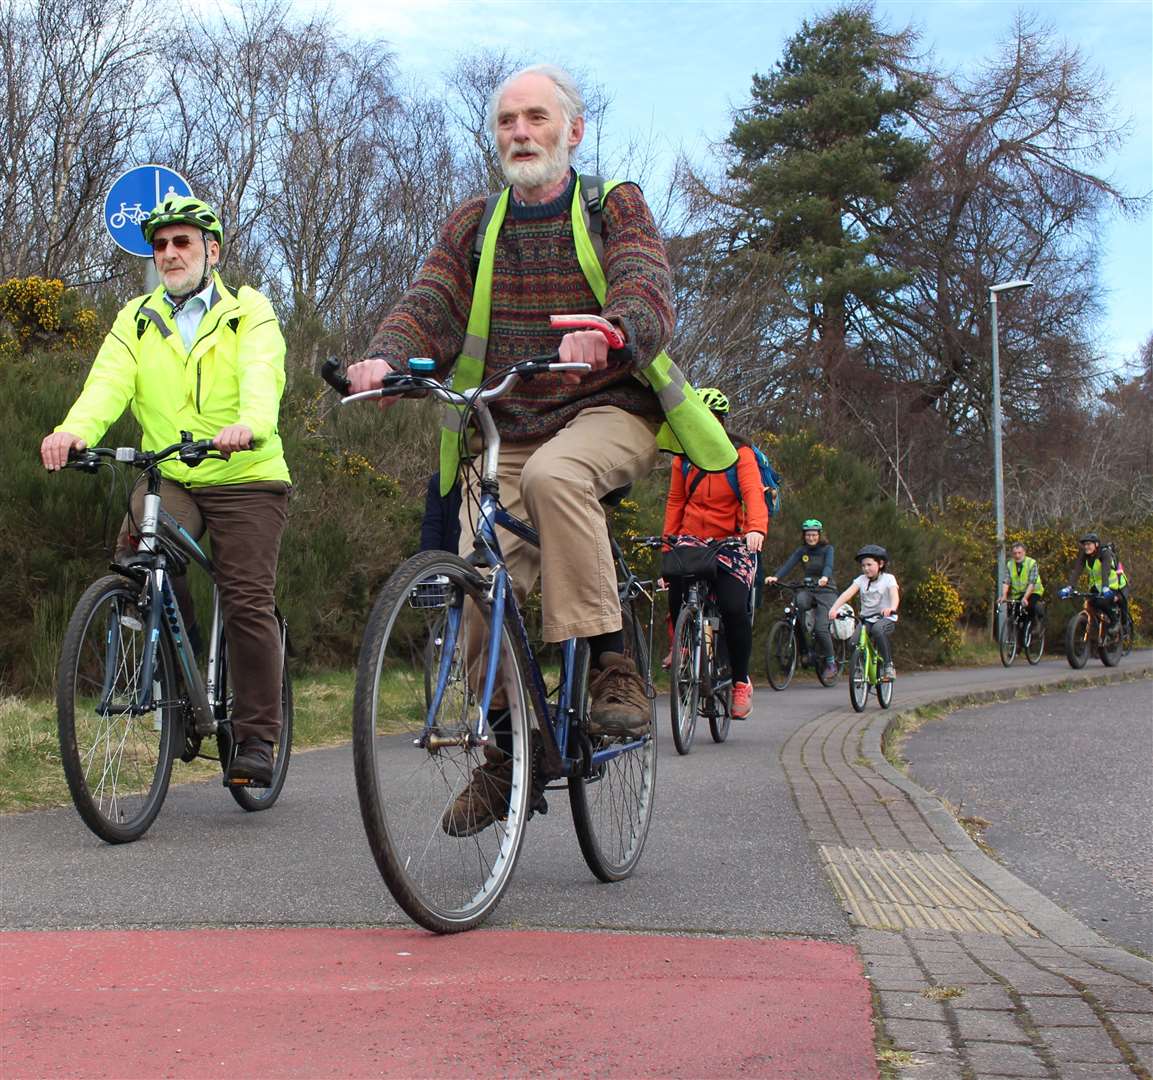 Cyclists on their way to the Knocknagael farm.